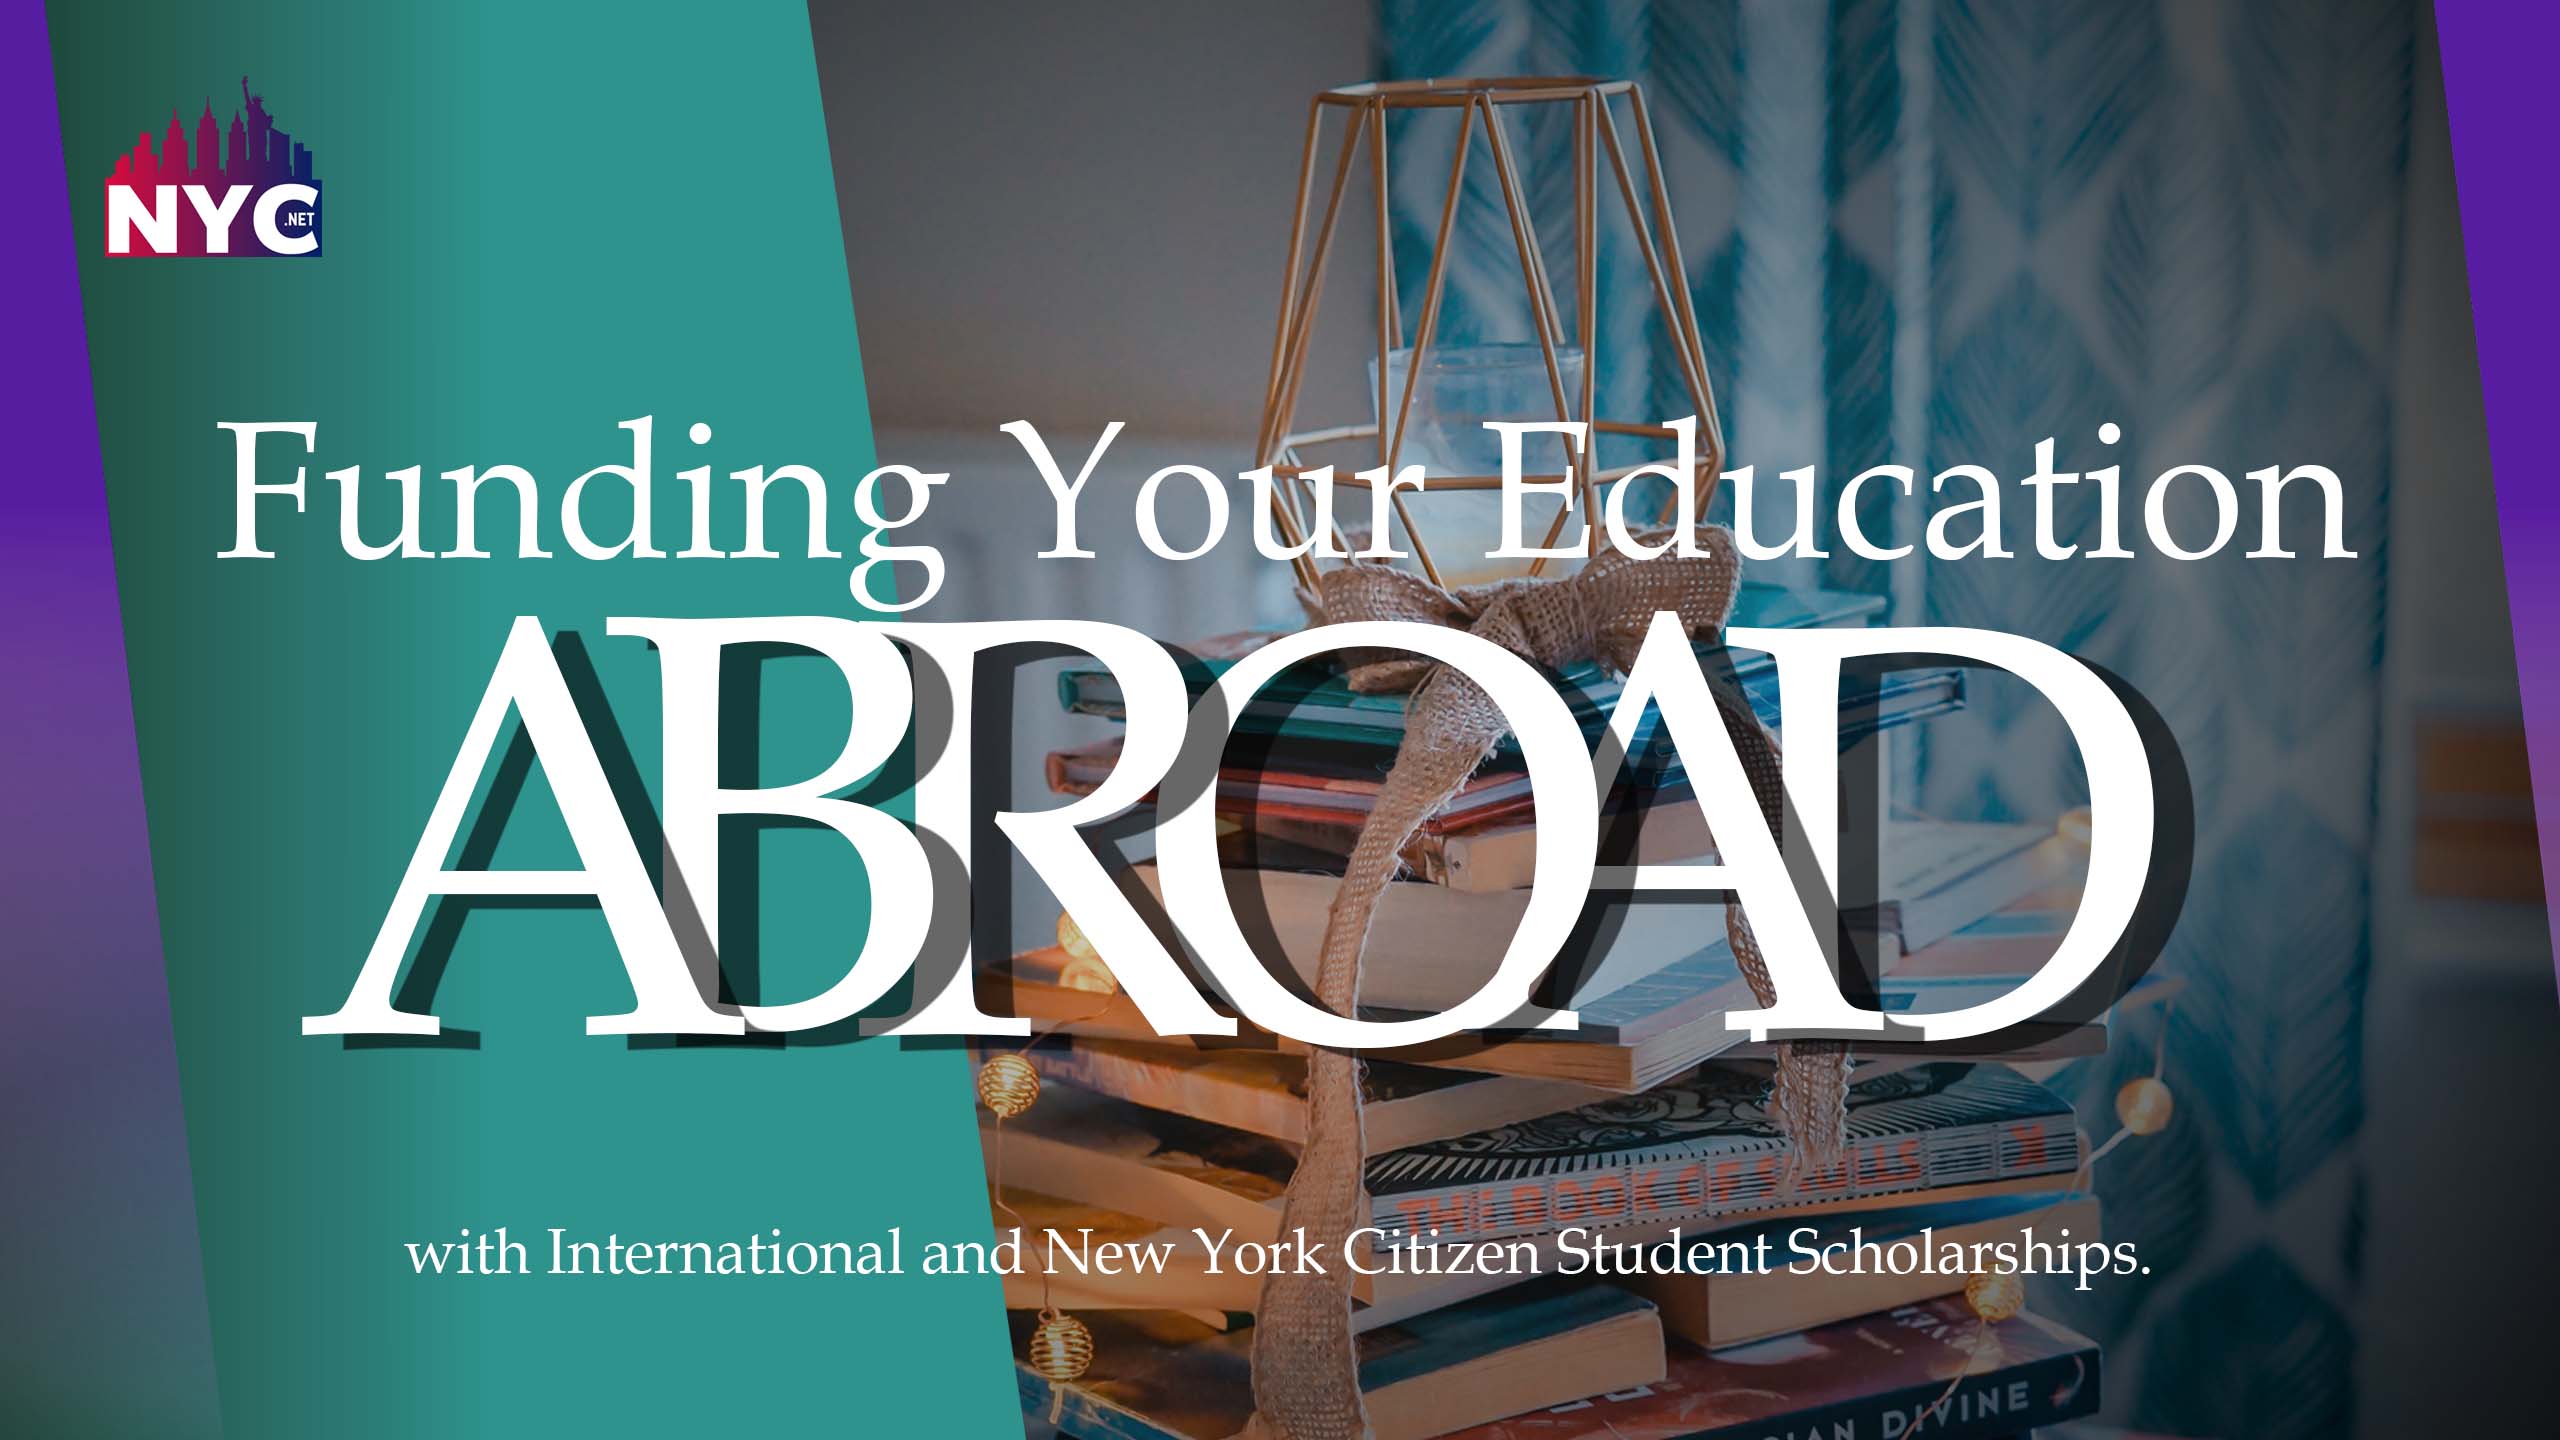 New York Citizen Student Scholarships